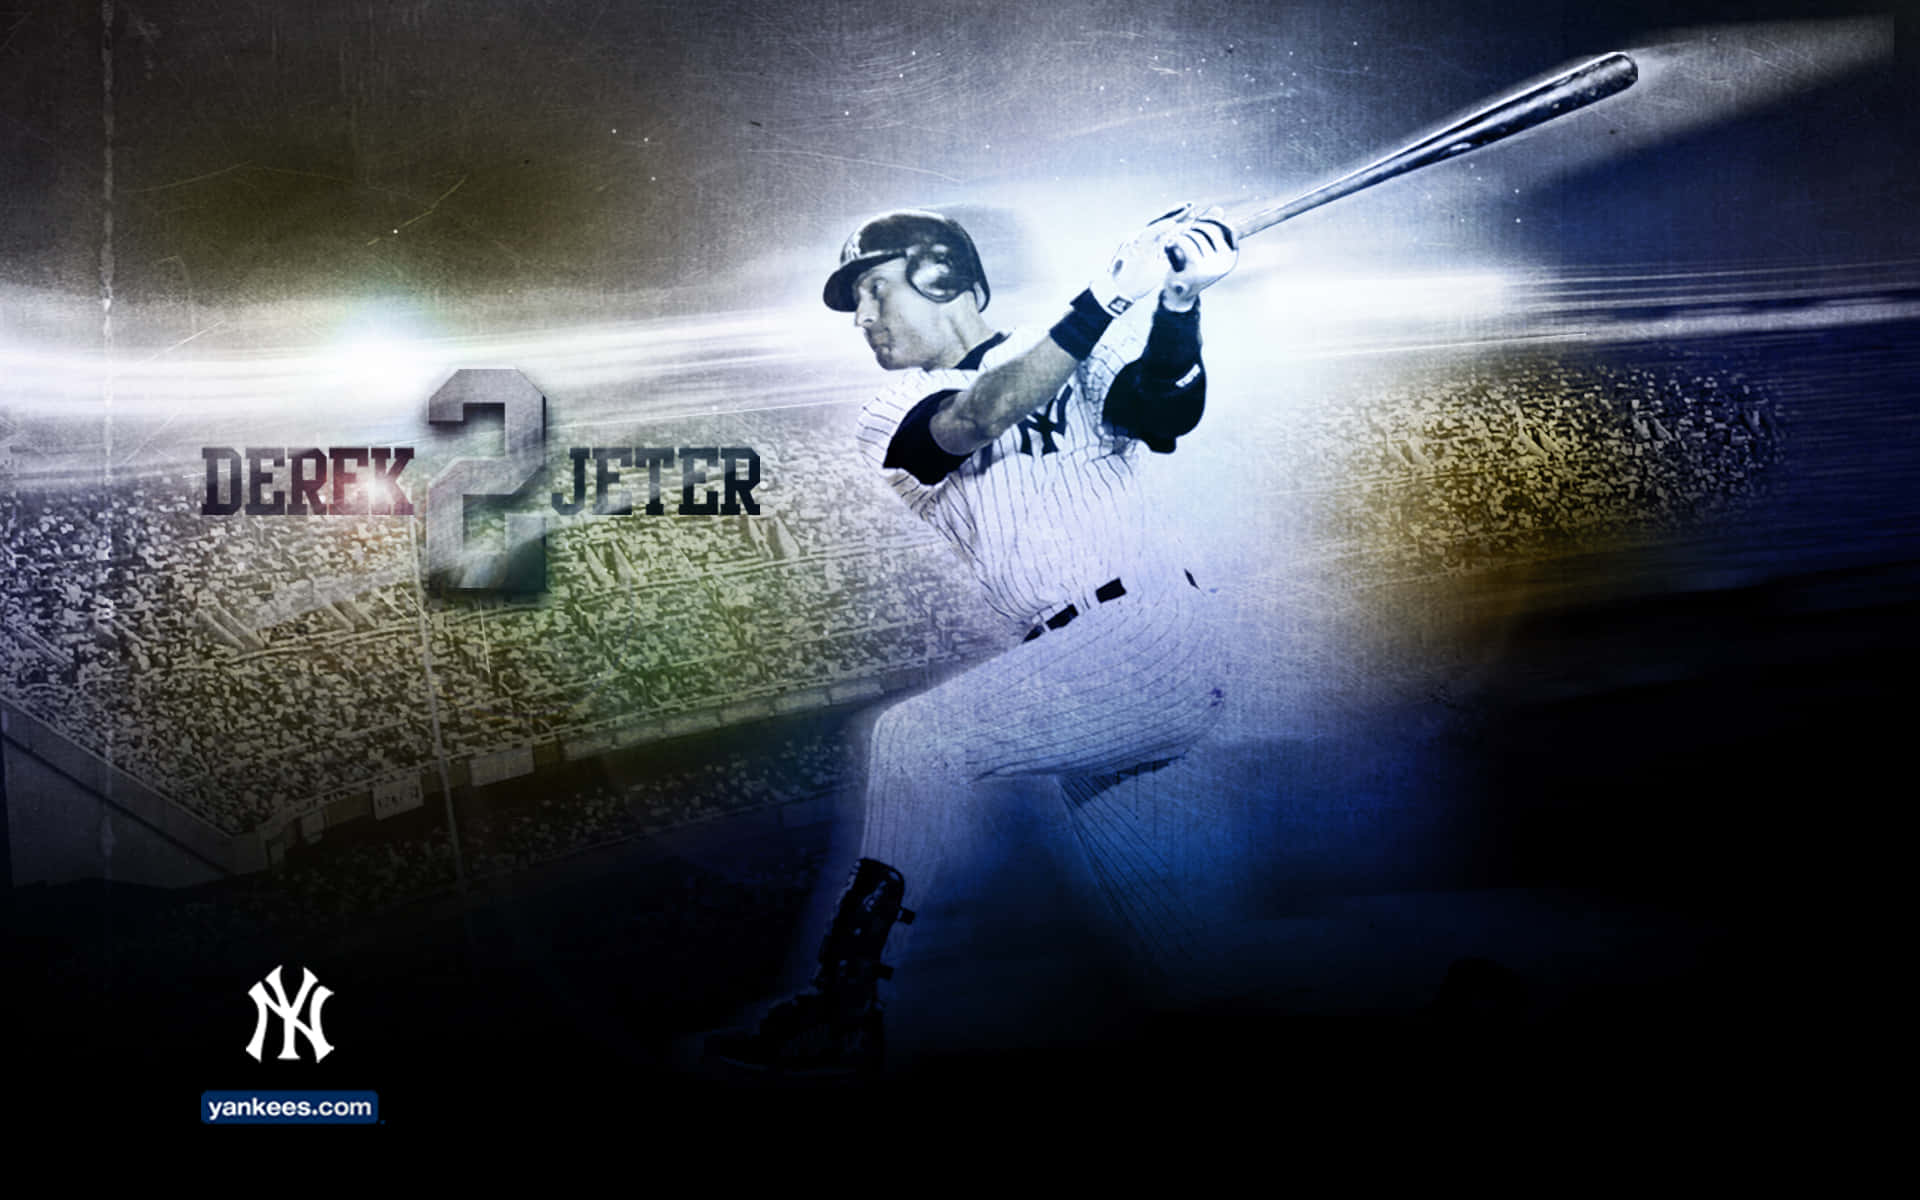 Yankee'sderek Jeter - Derek Jeter De Los Yankees Fondo de pantalla